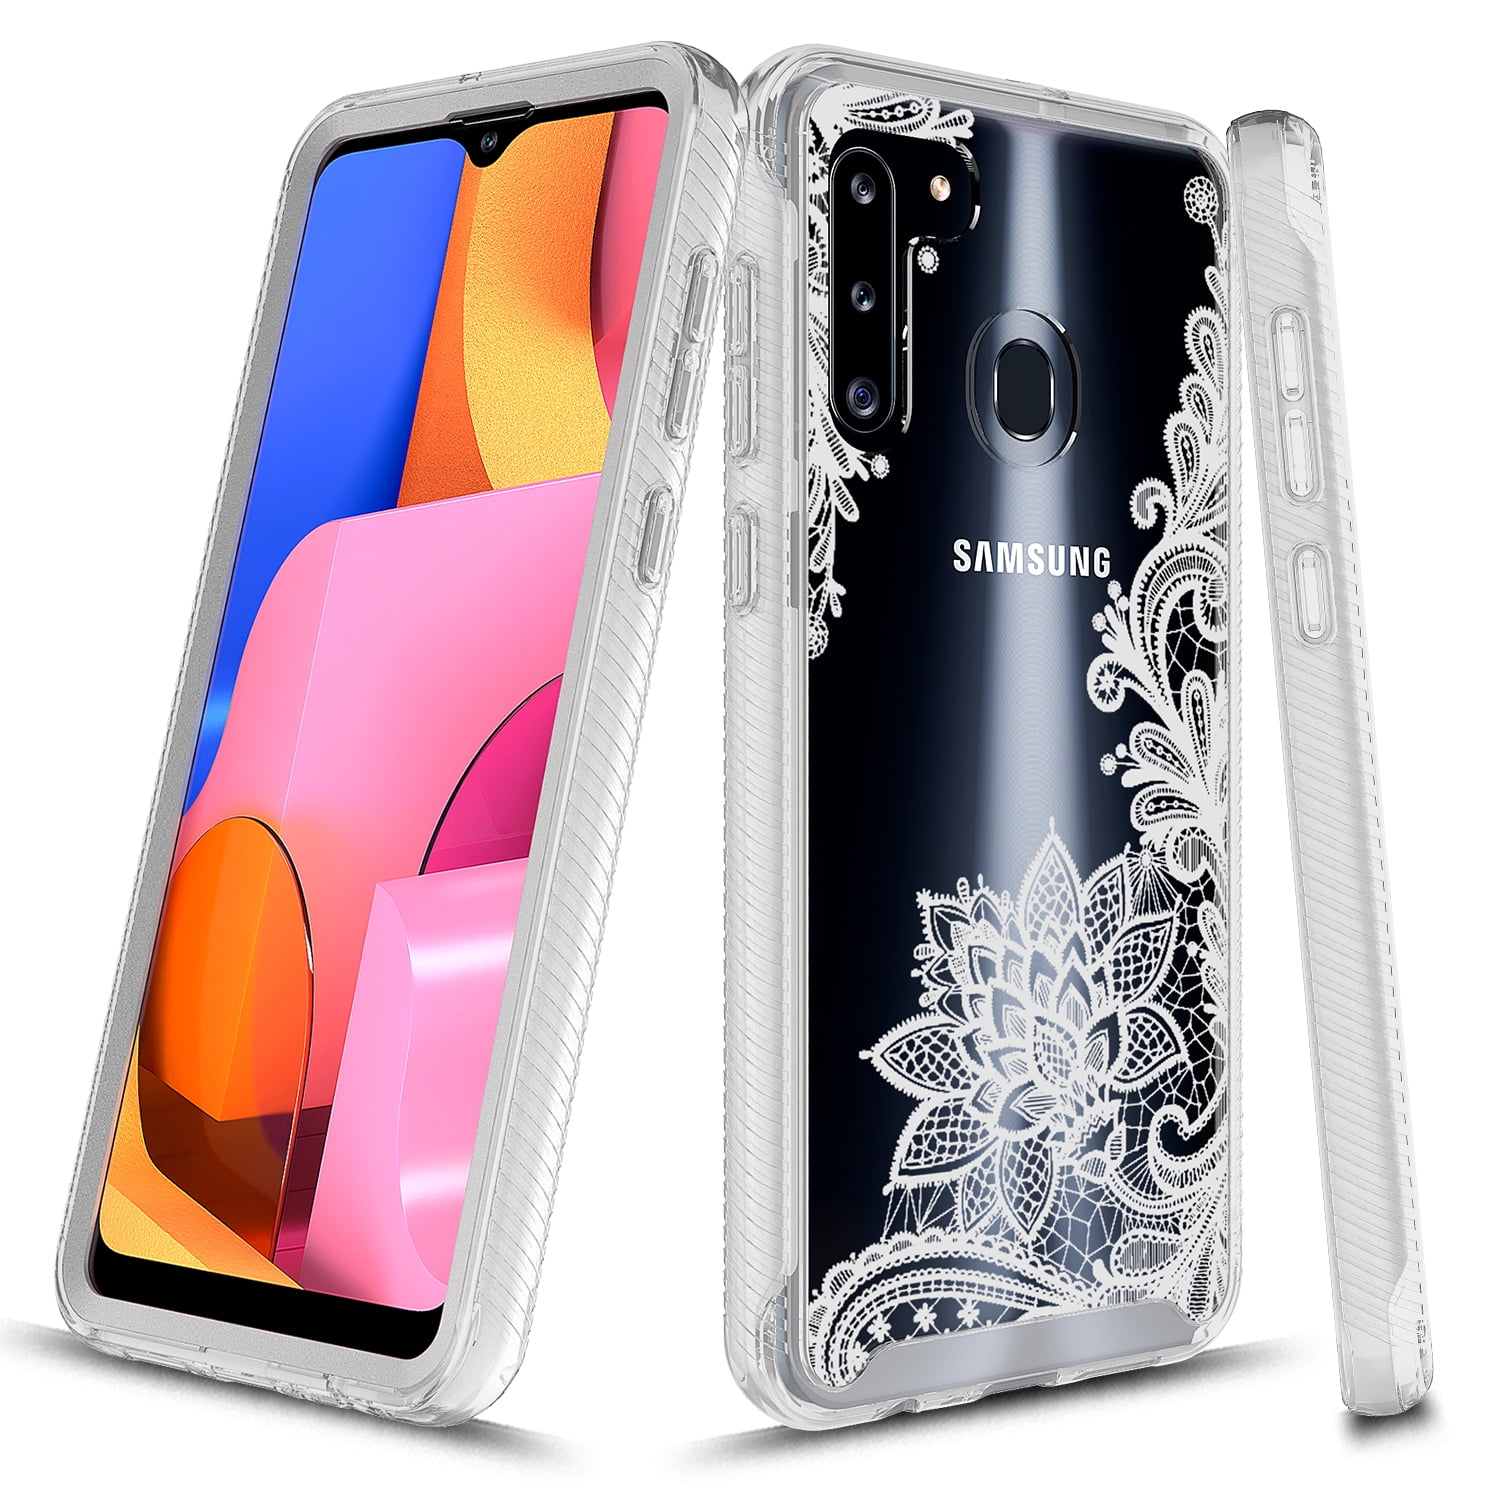 Tracfone Samsung Galaxy A11, 32GB Black - Prepaid Smartphone 